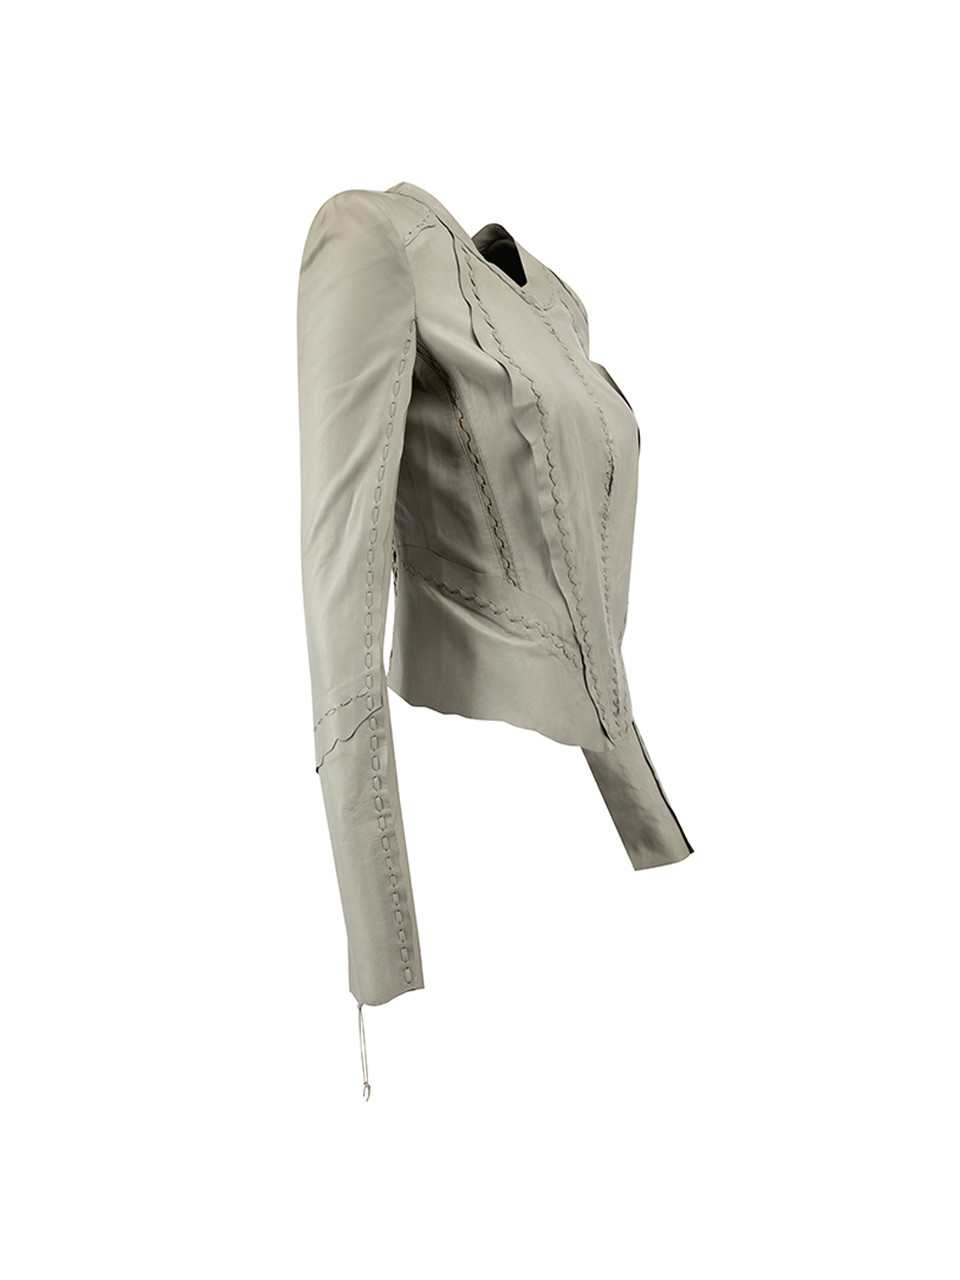 Roberto Cavalli Grey Leather Weave Accent Jacket